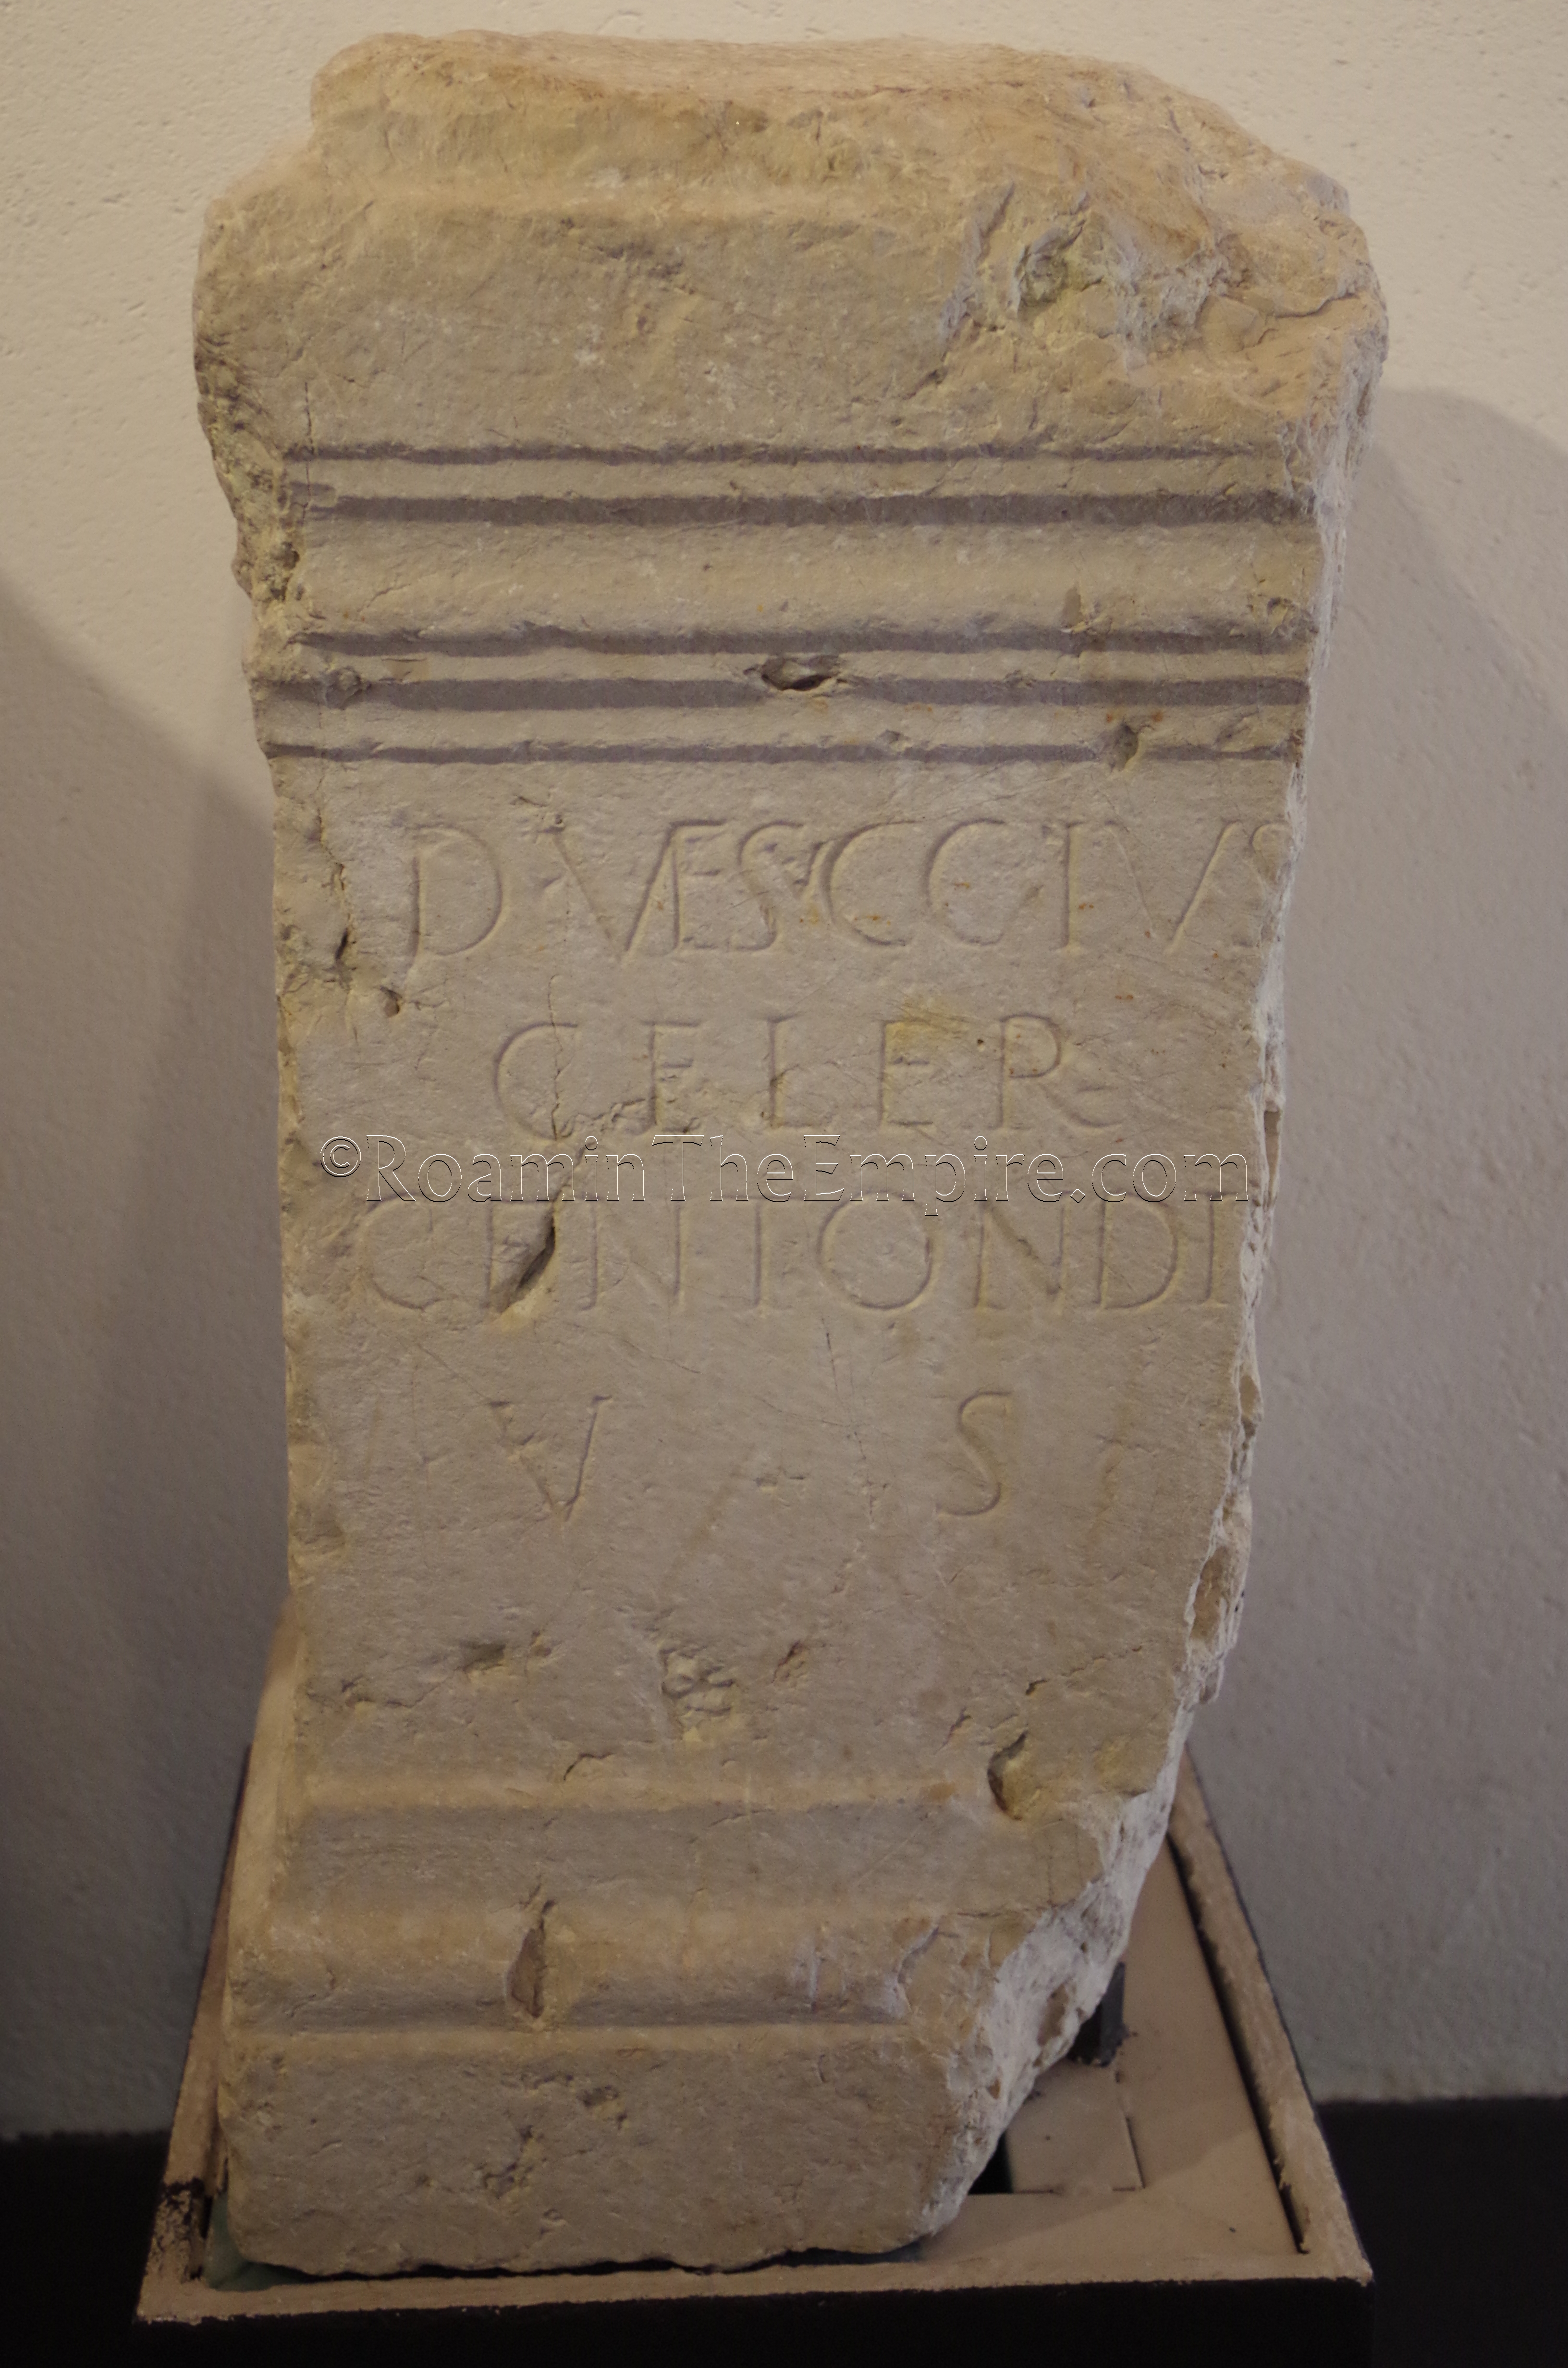 Altar dedicated to the Gallic deity Centondis by Decimius Vessucius Celer. Found in Nice and displayed in the Musée et Site Archeologique Nice Cemenelum.